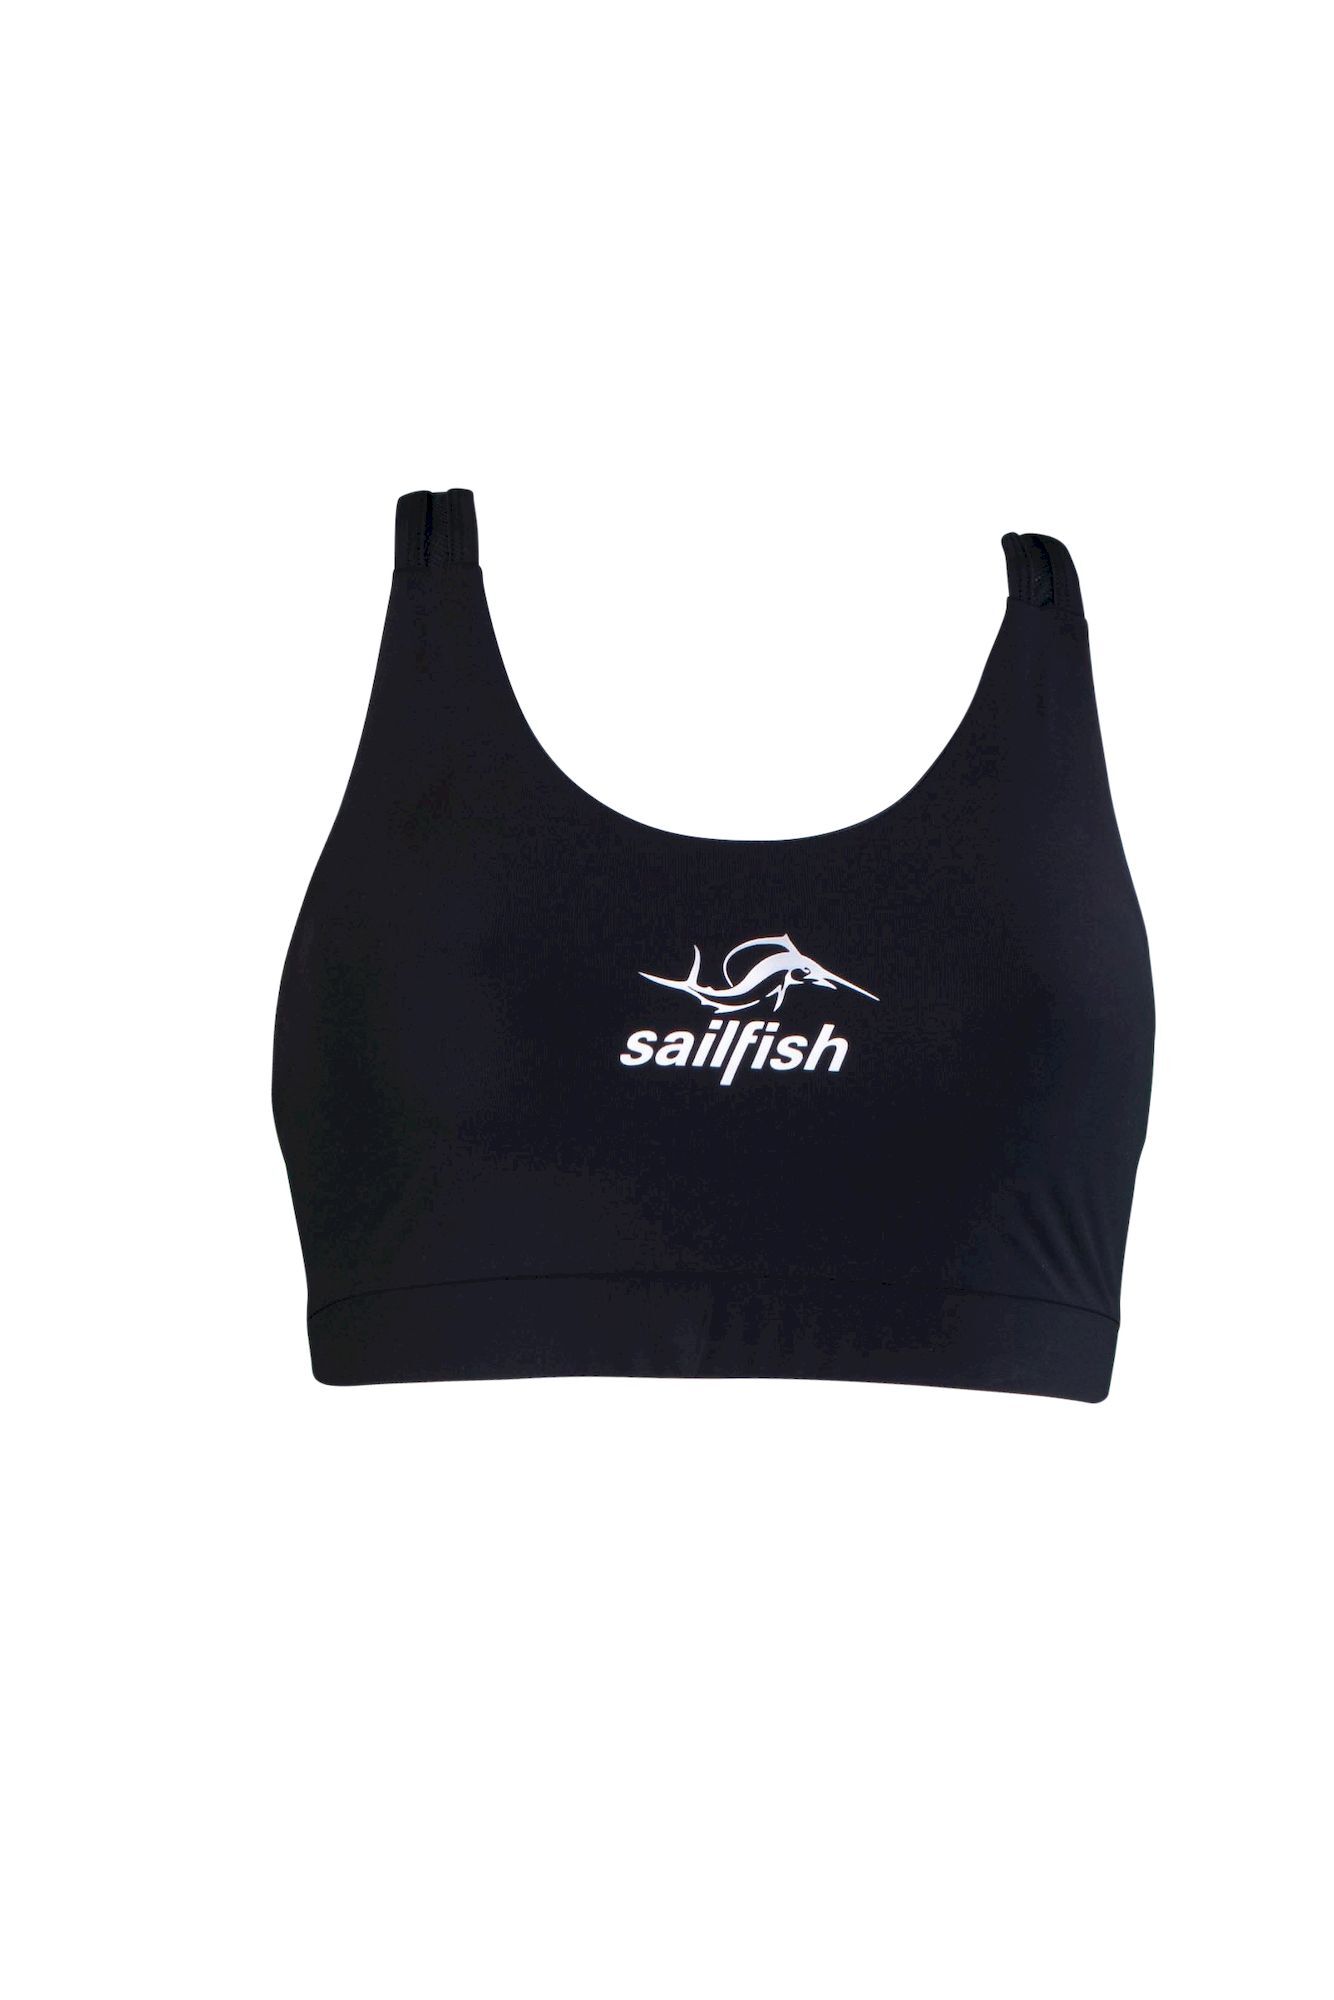 Sailfish Womens Tribra Perform - Body triathlon - Donna | Hardloop